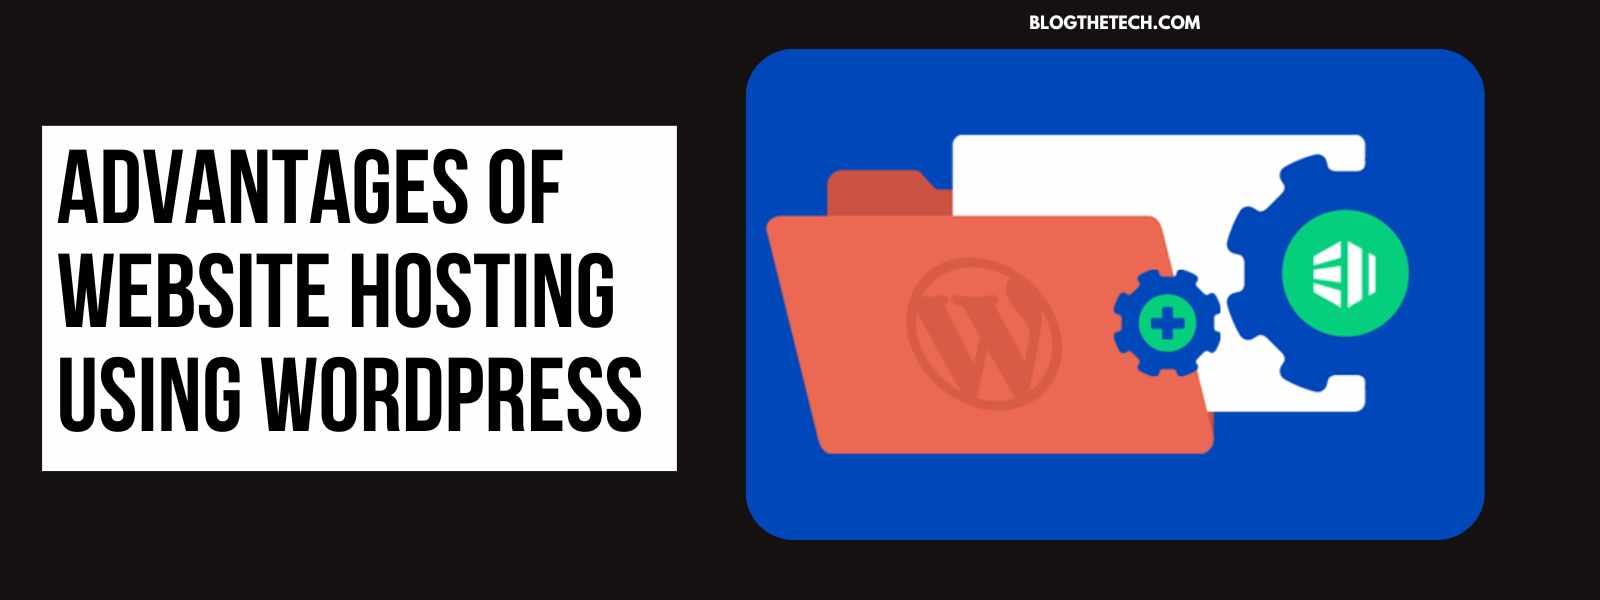 Website Hosting Using WordPress